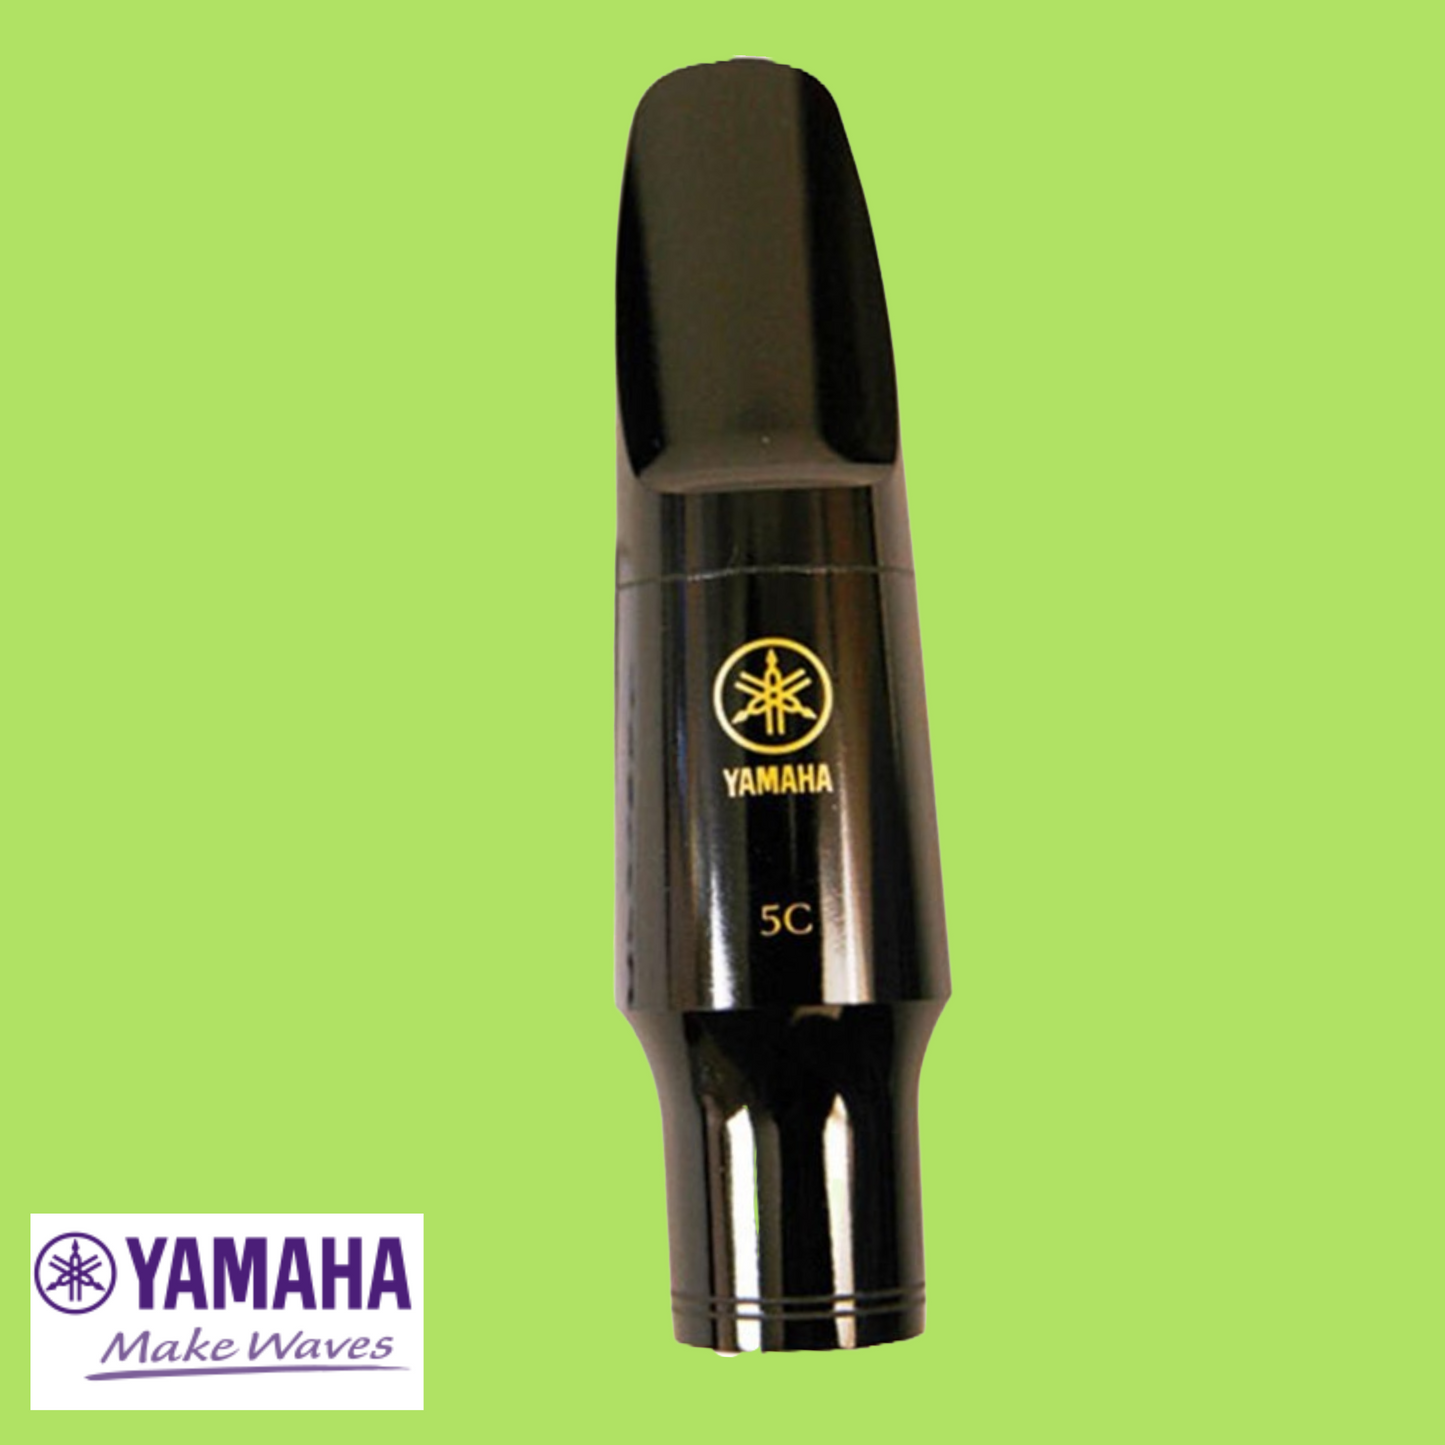 Yamaha B Flat Clarinet 5C Mouthpiece Musical Instruments & Accessories